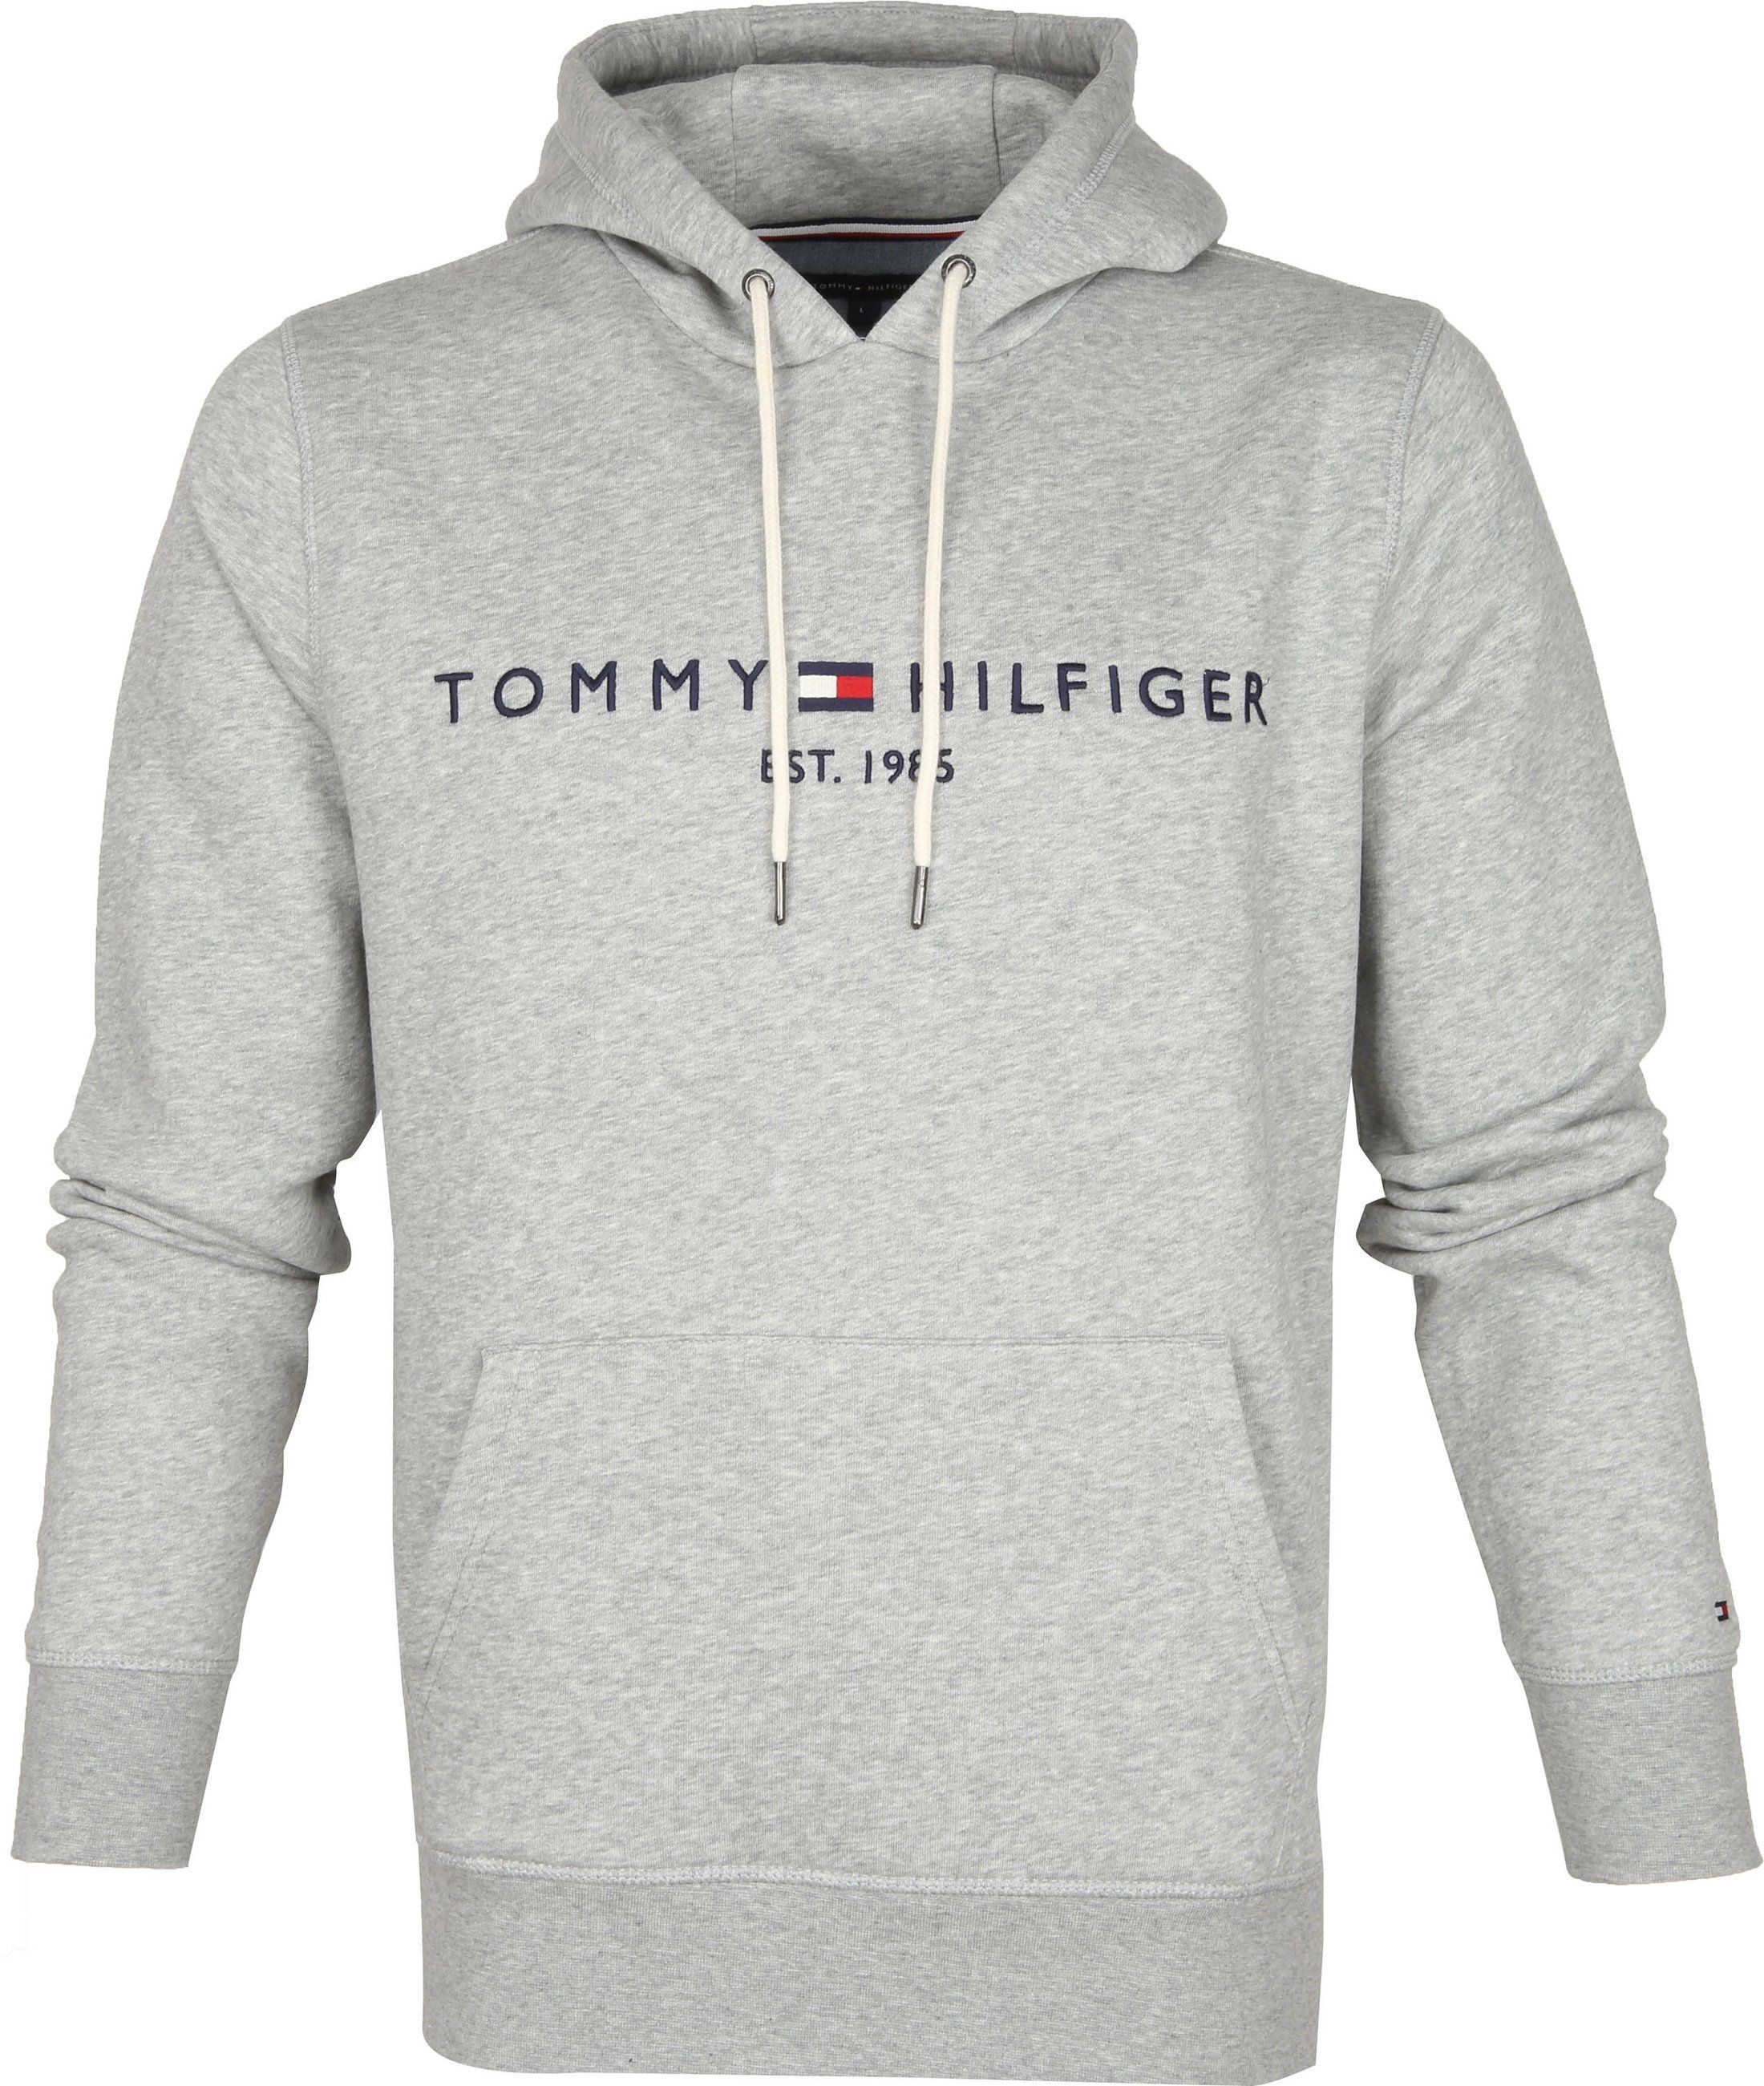 Tommy Hilfiger Hoodie Core Grey size L